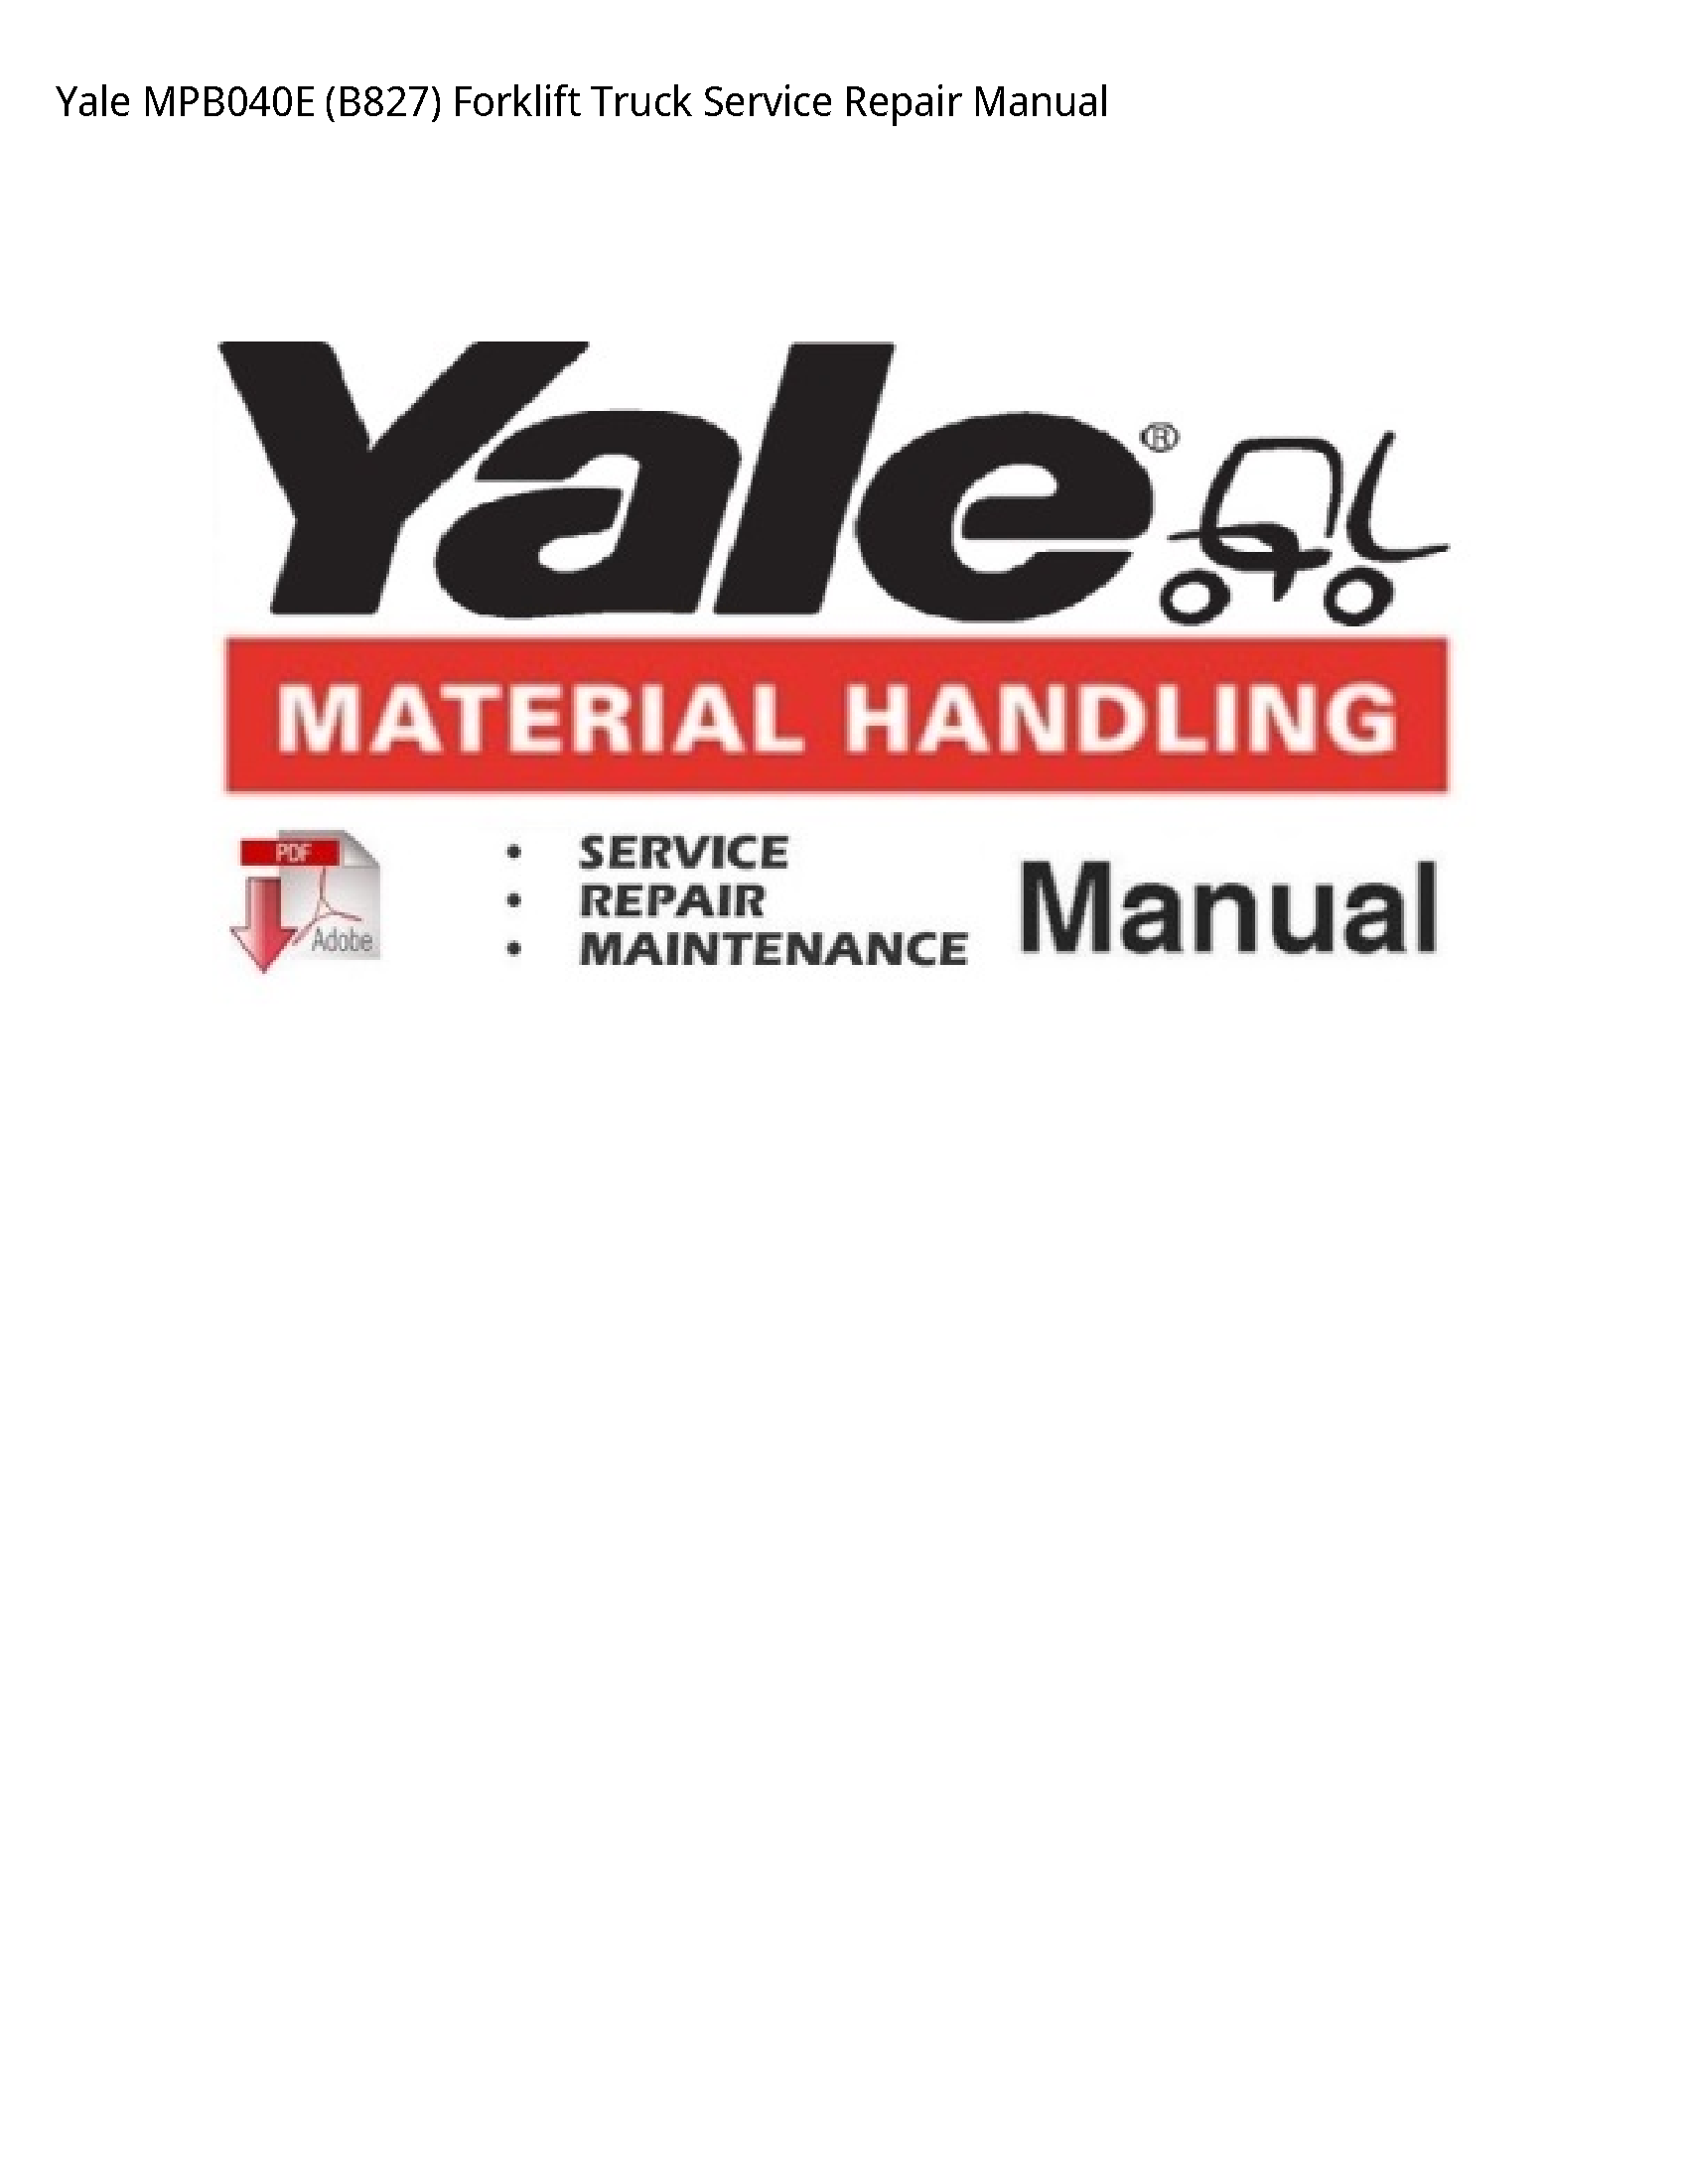 Yale MPB040E Forklift Truck manual